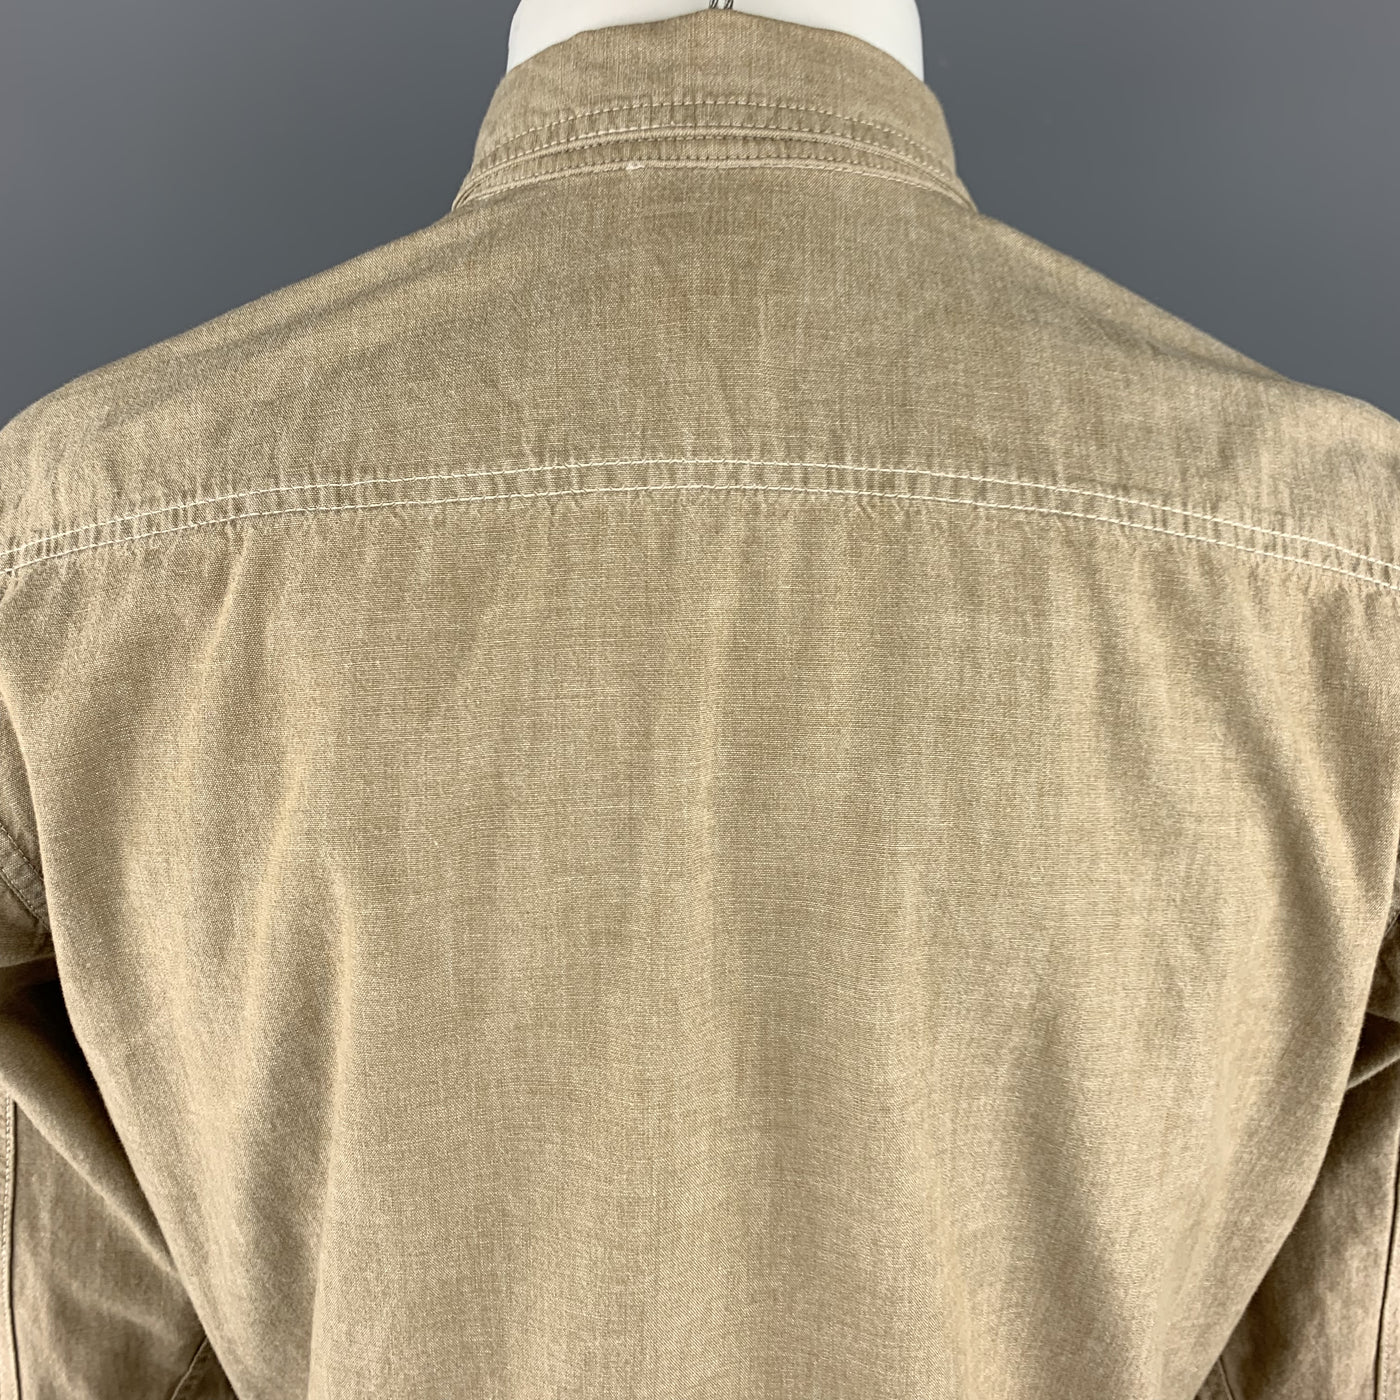 STEVEN ALAN Size M Khaki Solid Cotton Popover Long Sleeve Shirt